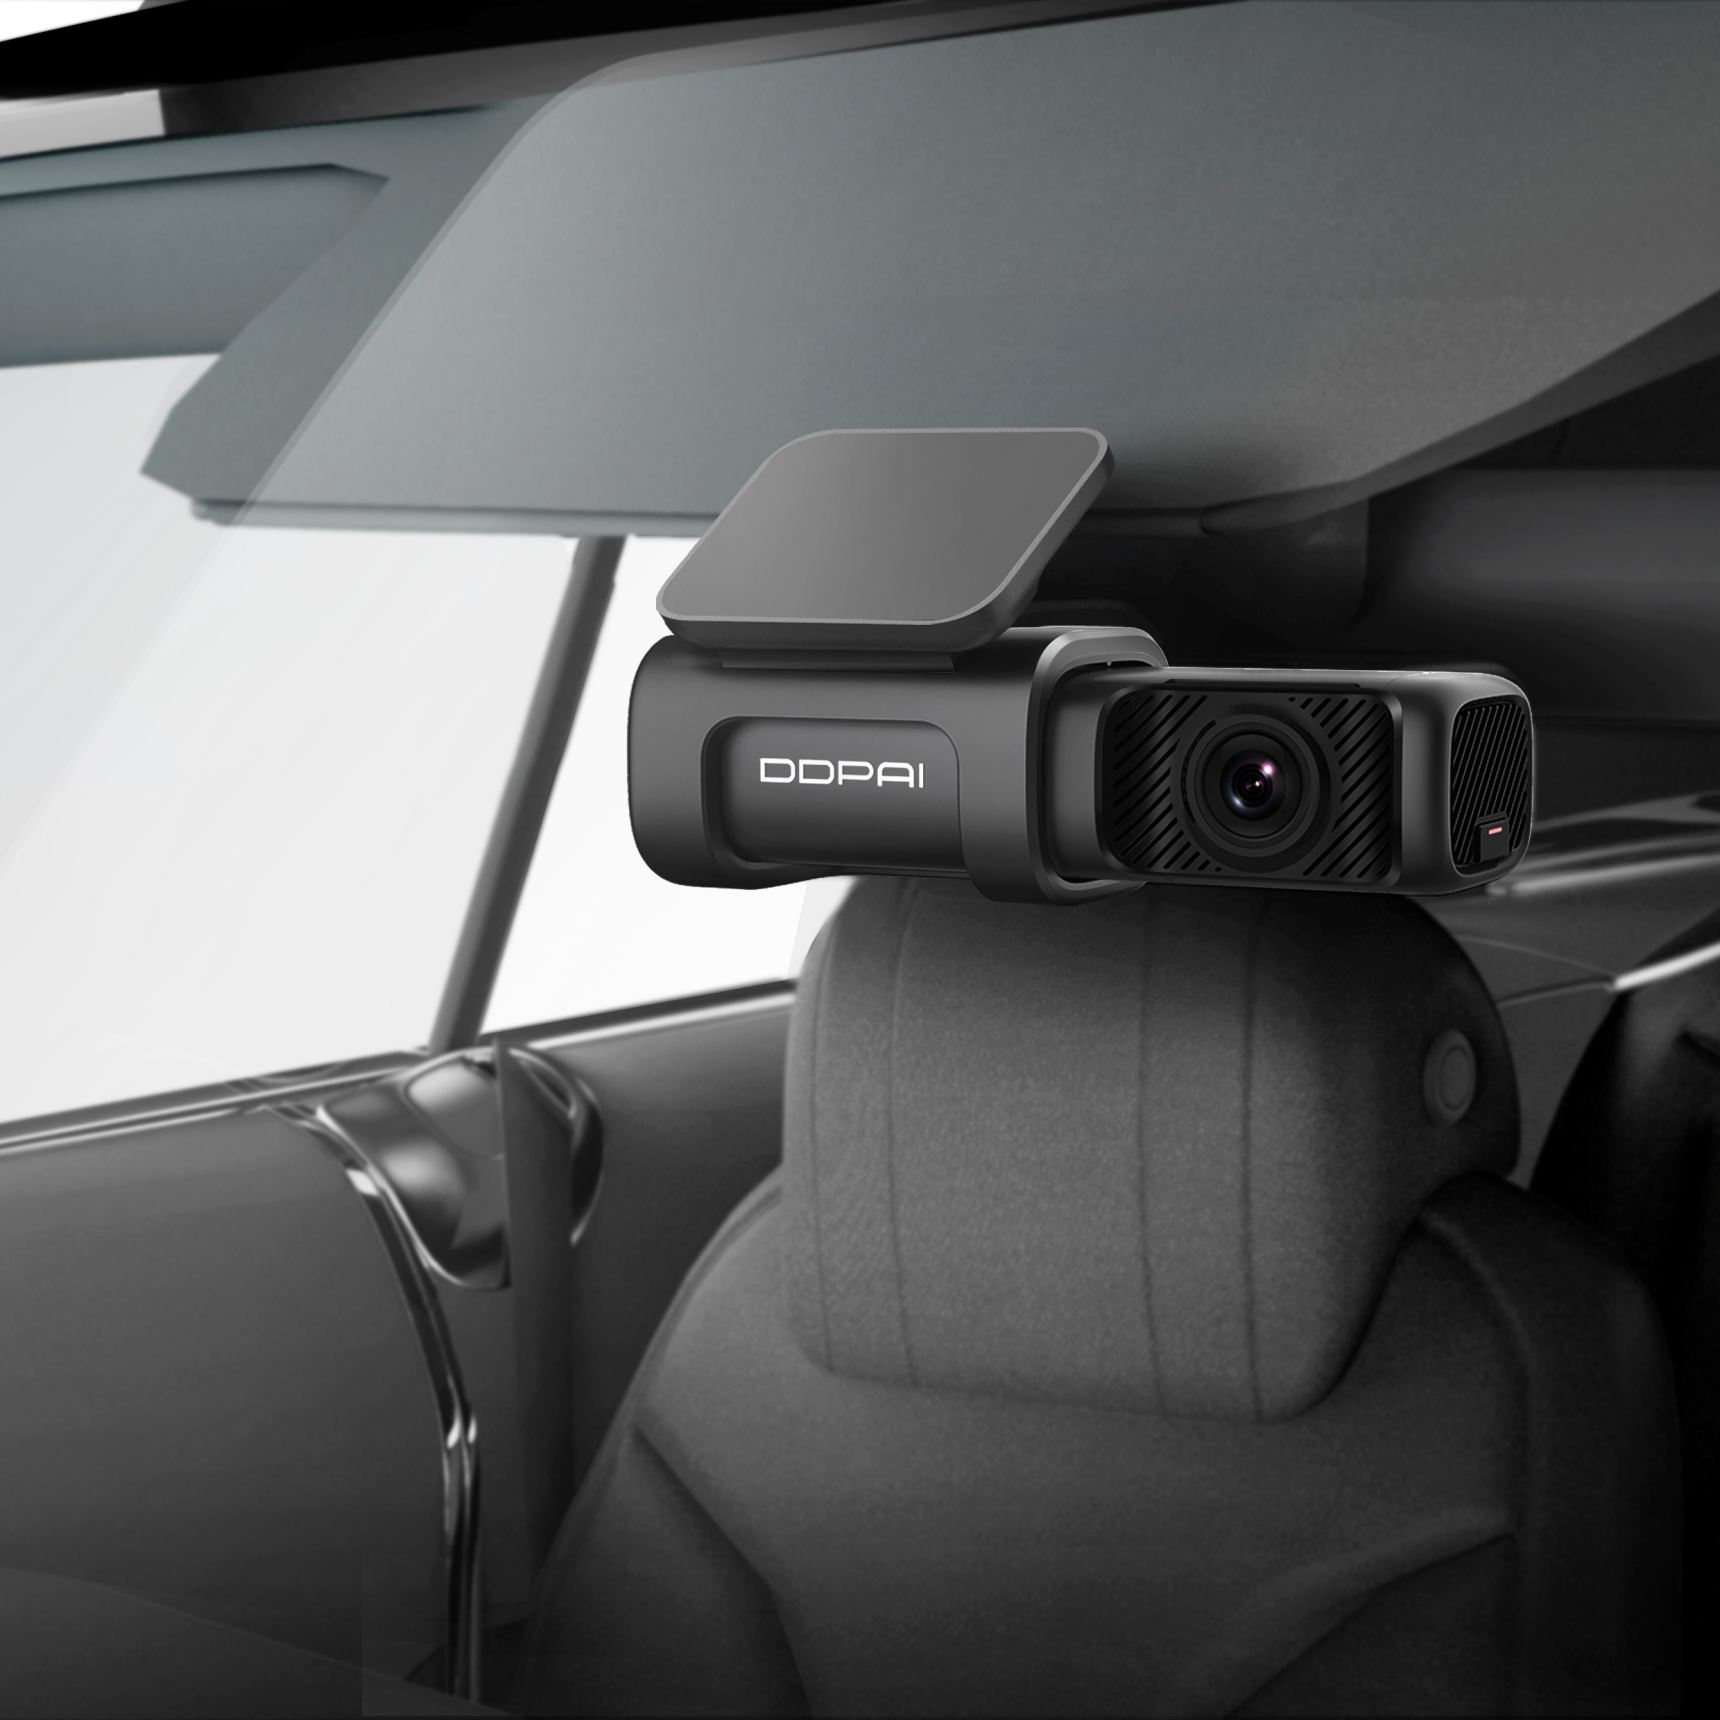 DDPai Dash Cam Mini5 4K 2160P UHD DVR Car Camera Android 5GHz Wifi Auto Drive Vehicle Video Recorder GPS Tracker Build-in 64GB